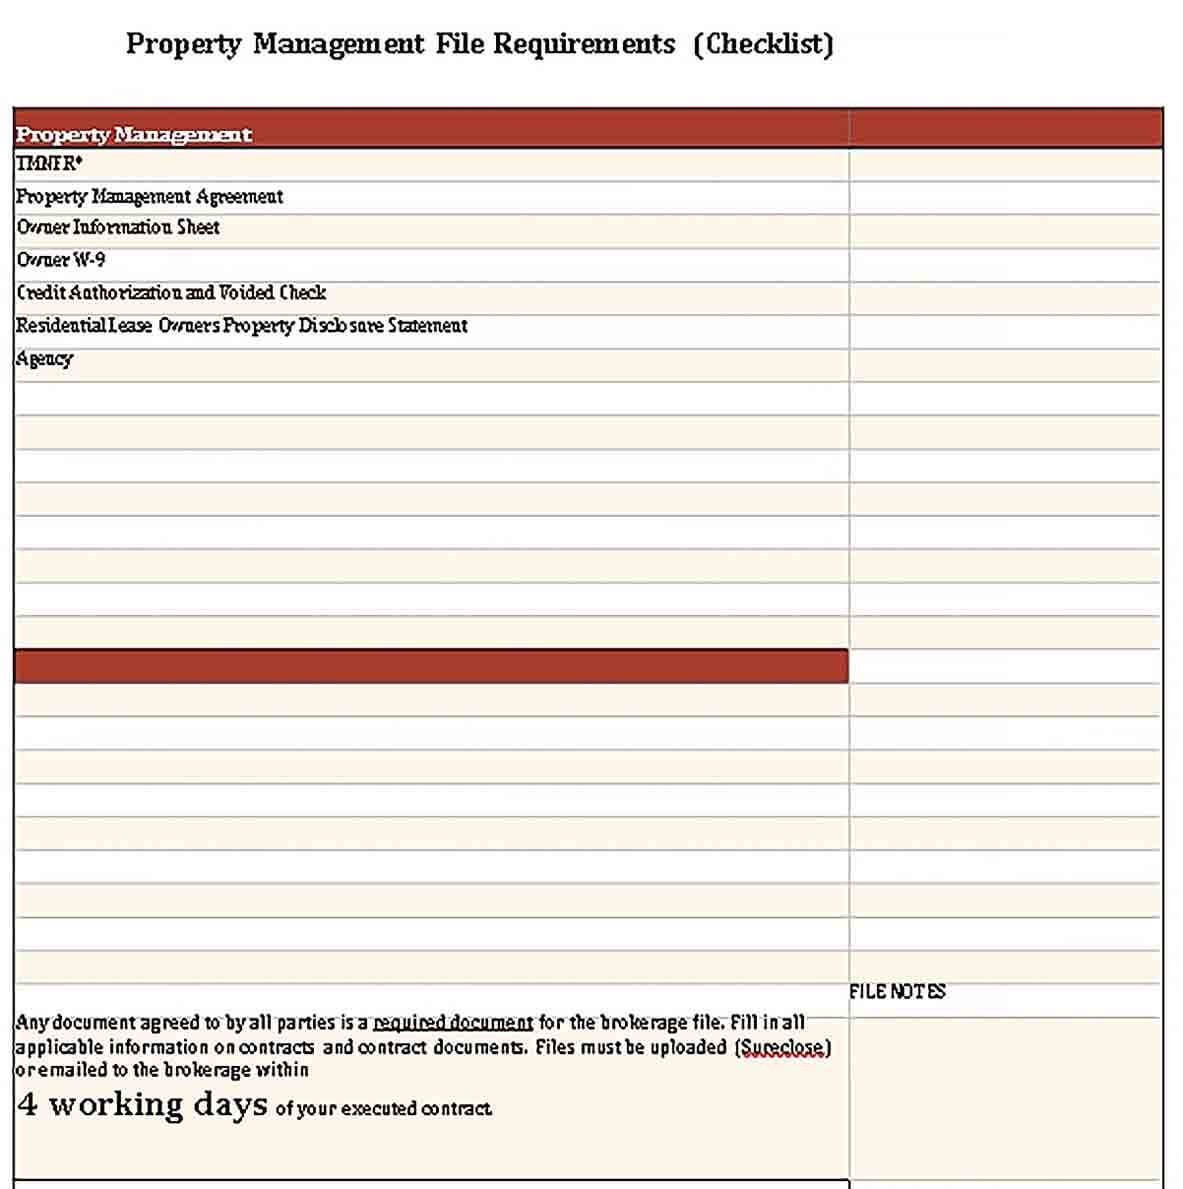 Sample Printable Property Management Checklist